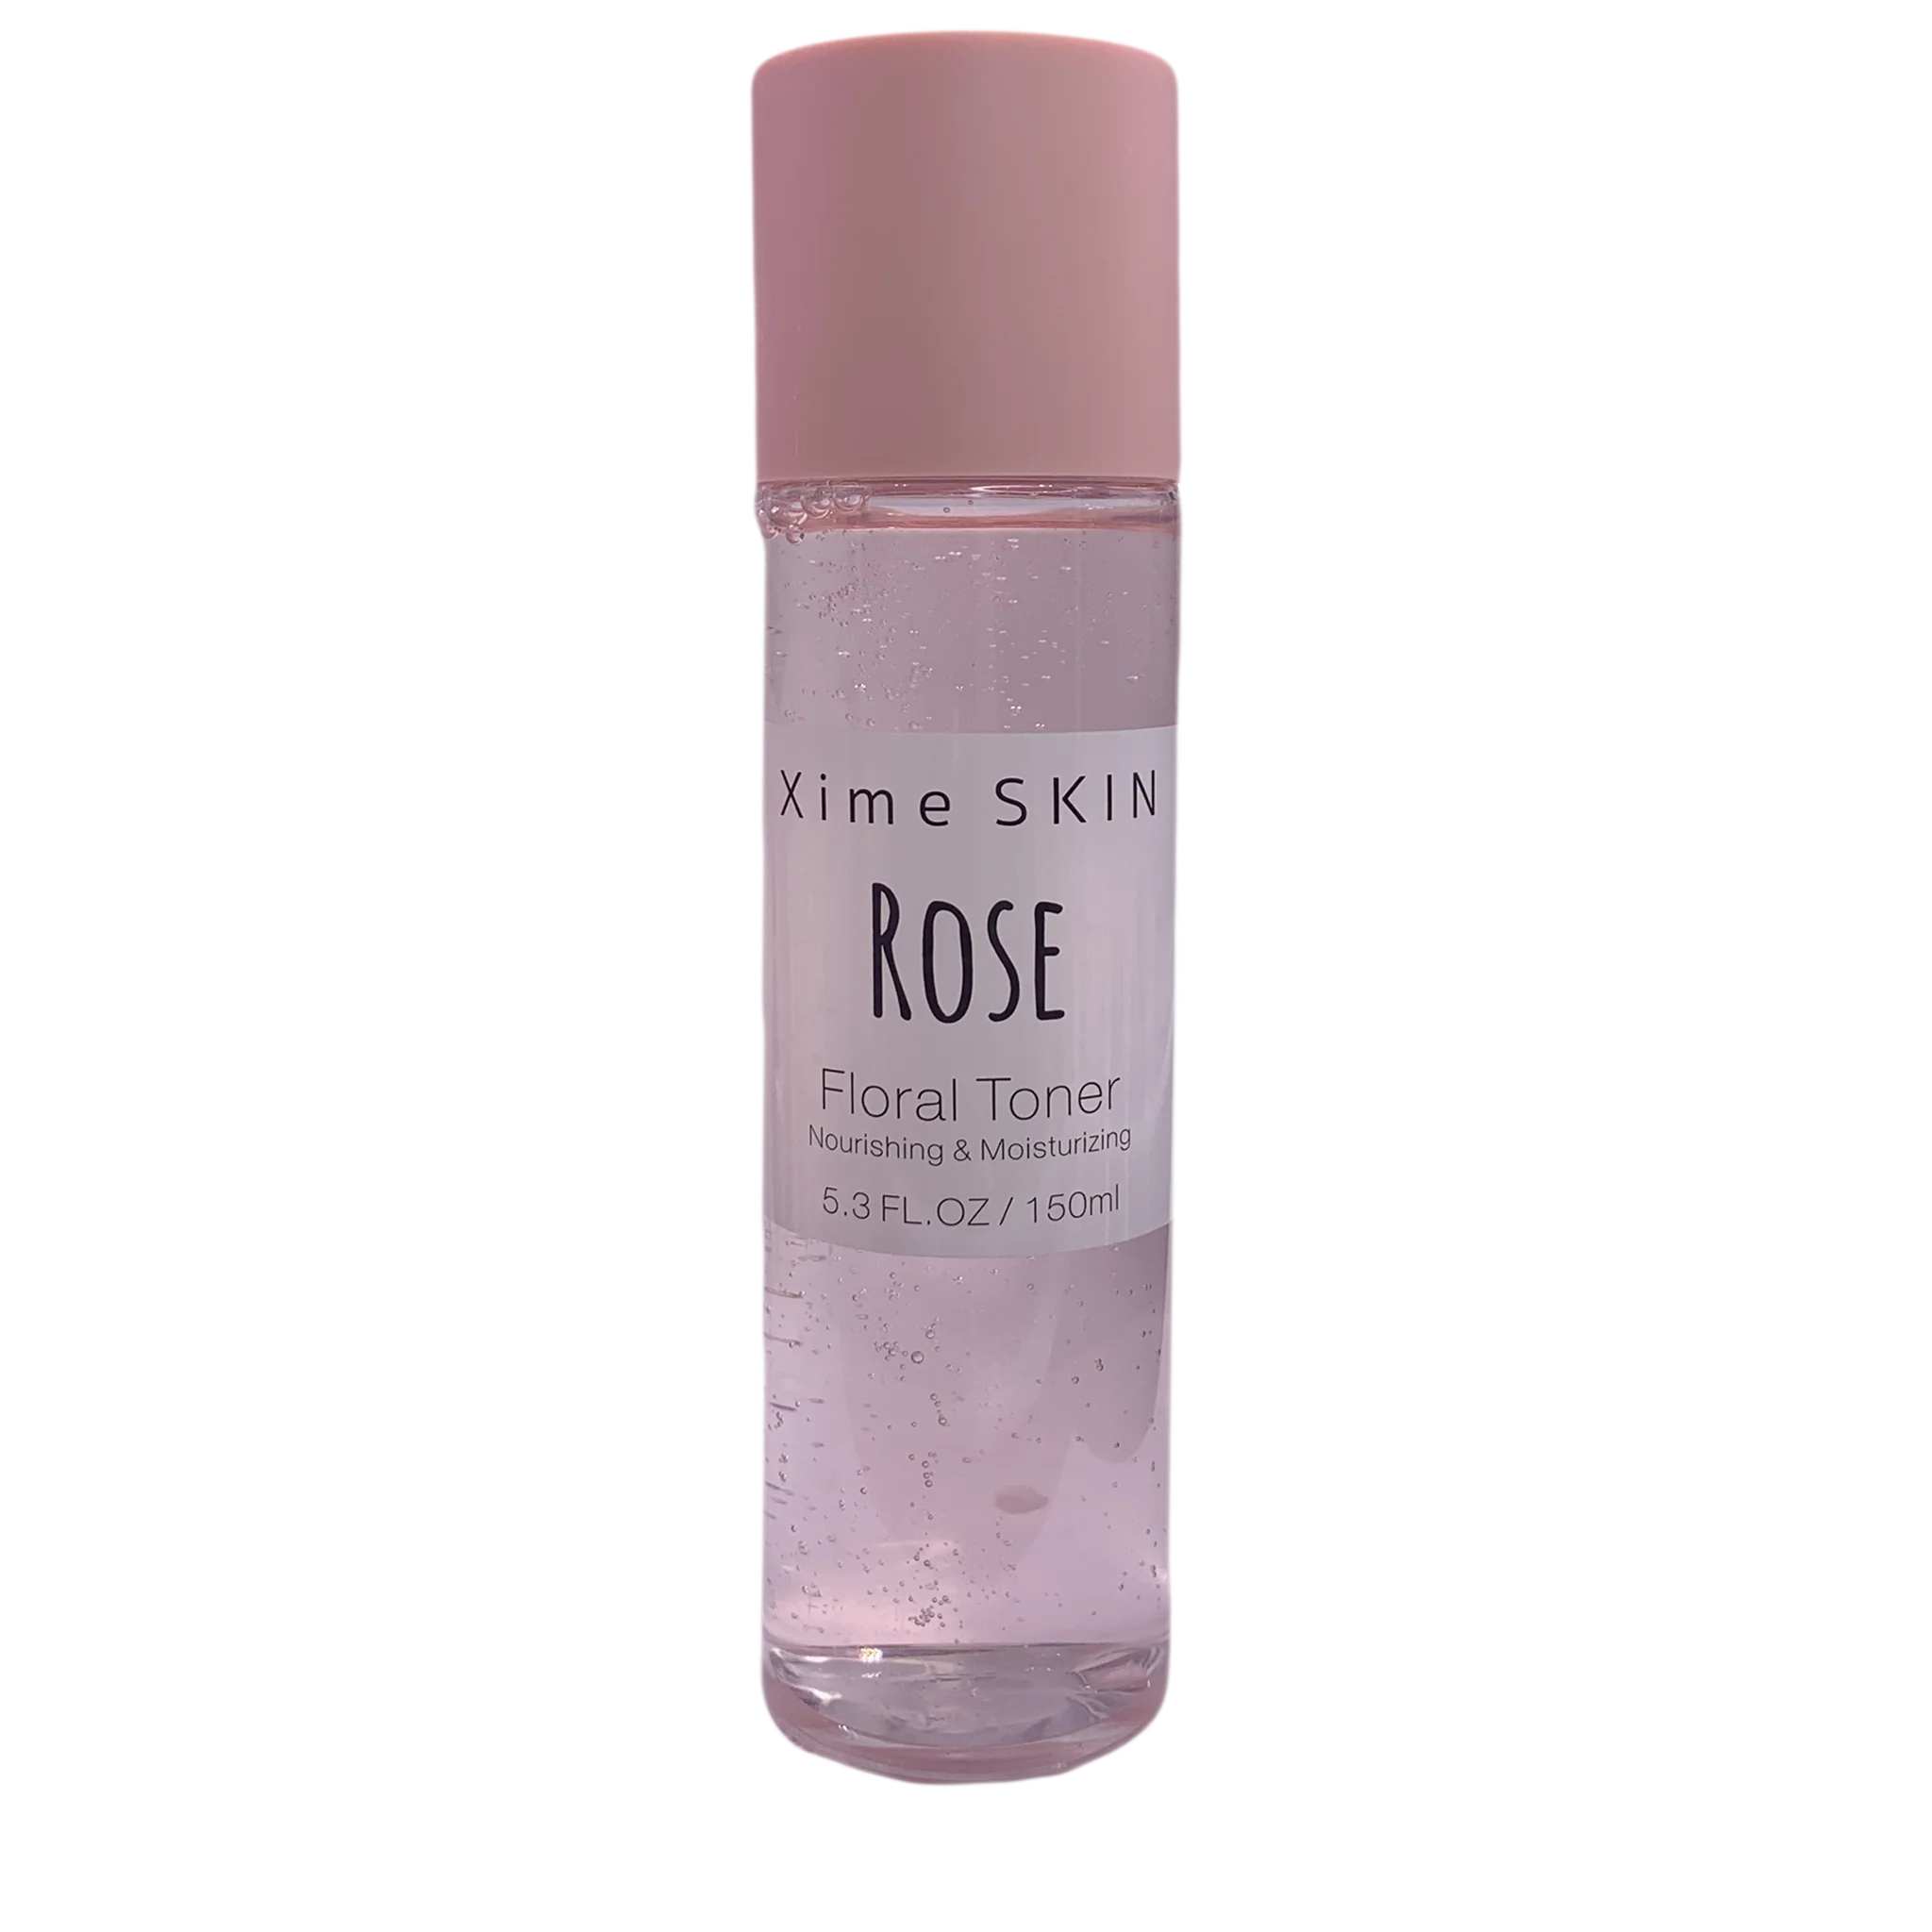 Xime Skin Rose Floral Toner